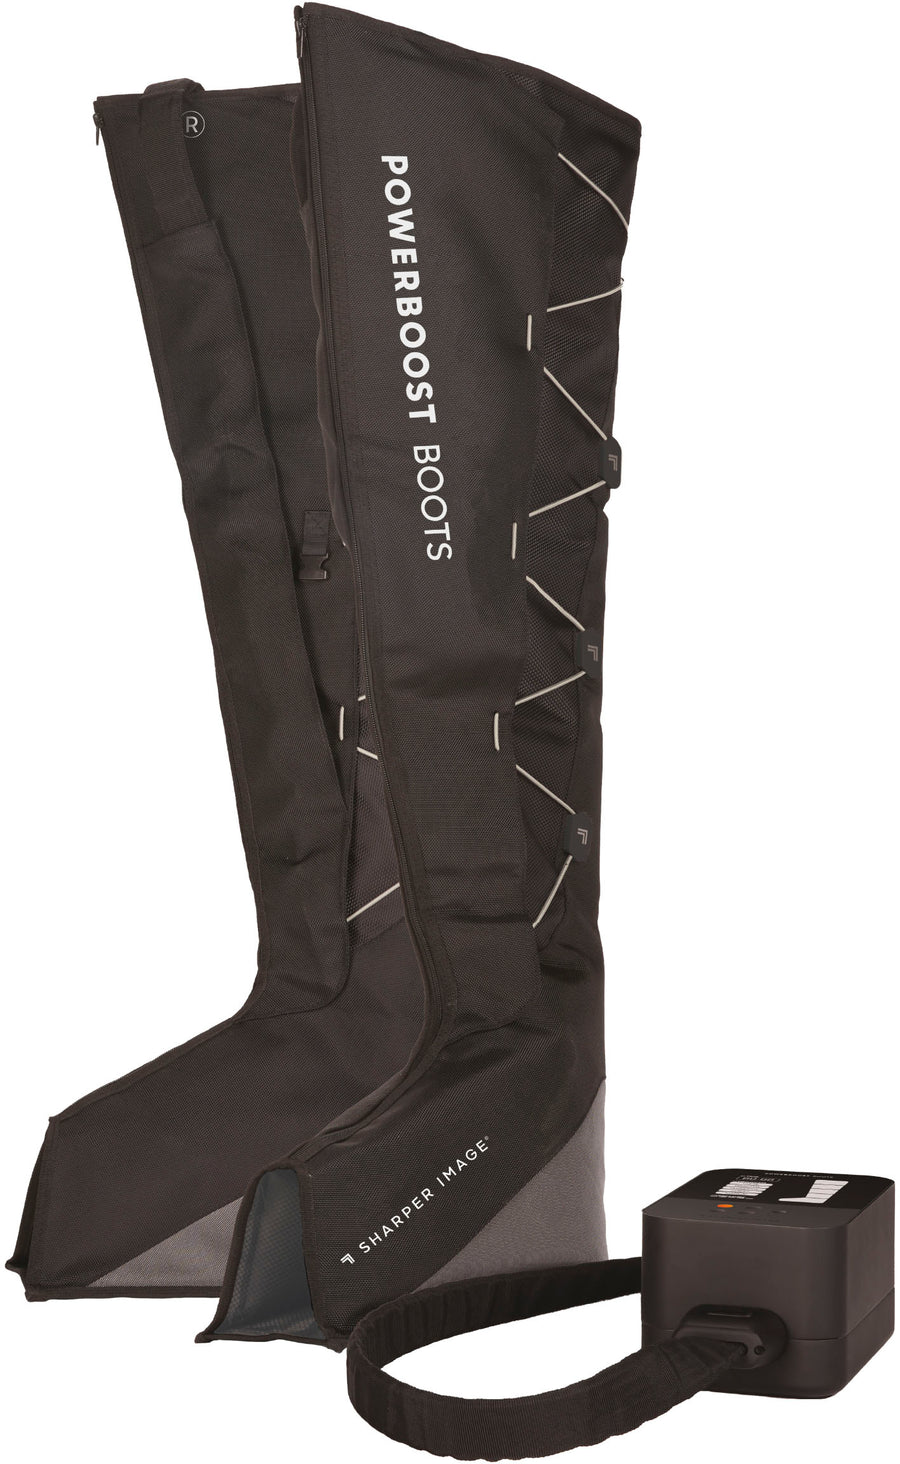 Sharper Image - Powerboost Boots, Air Compression Leg Massager Size S/M - Black_0